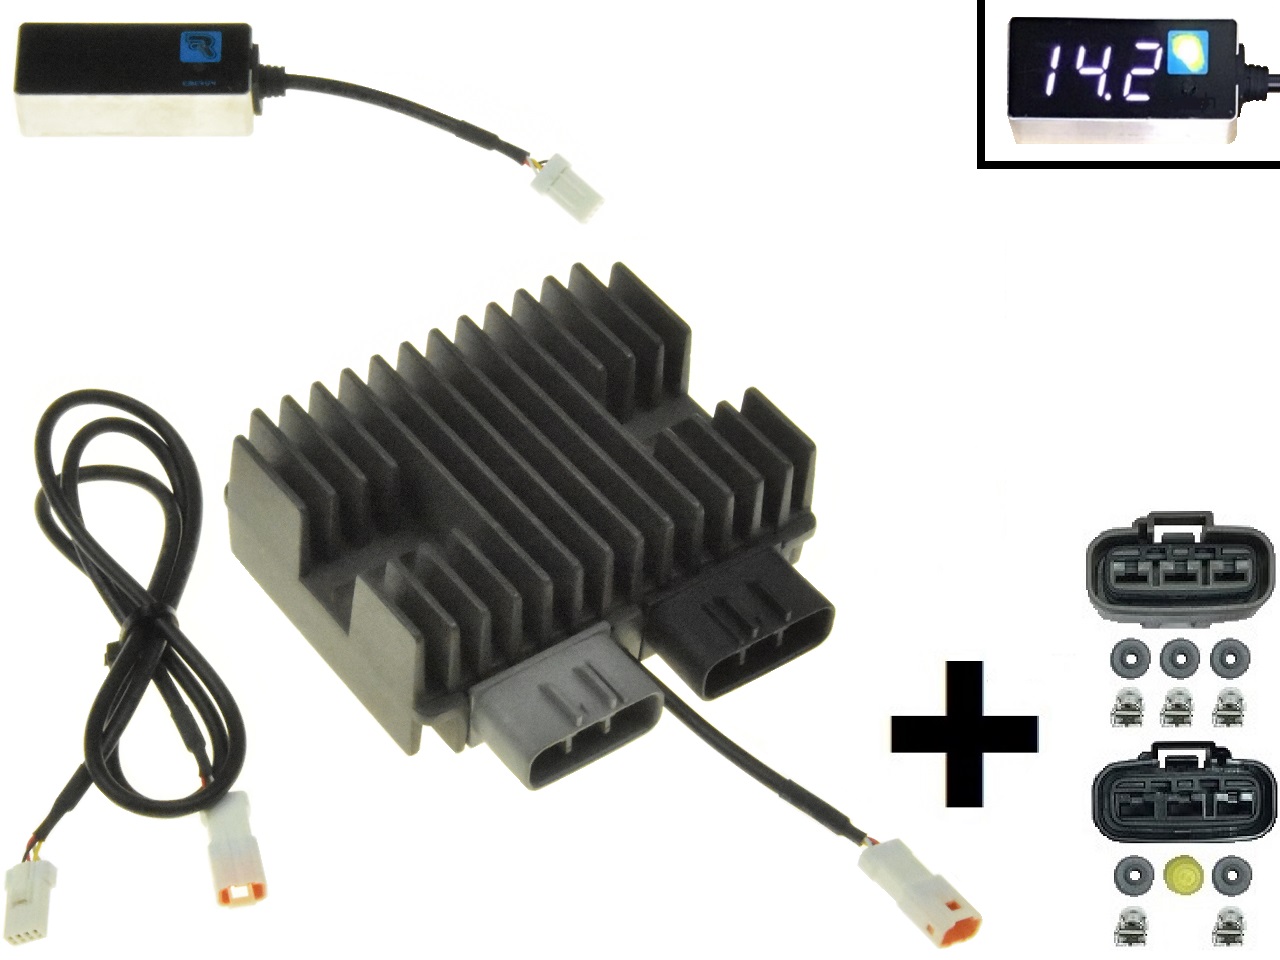 CARR5925-SERIE - MOSFET SERIE SERIES + CHECK Voltage regulator rectifier (improved SH847) 12V/50A/700W + connectors - Clique na Imagem para Fechar